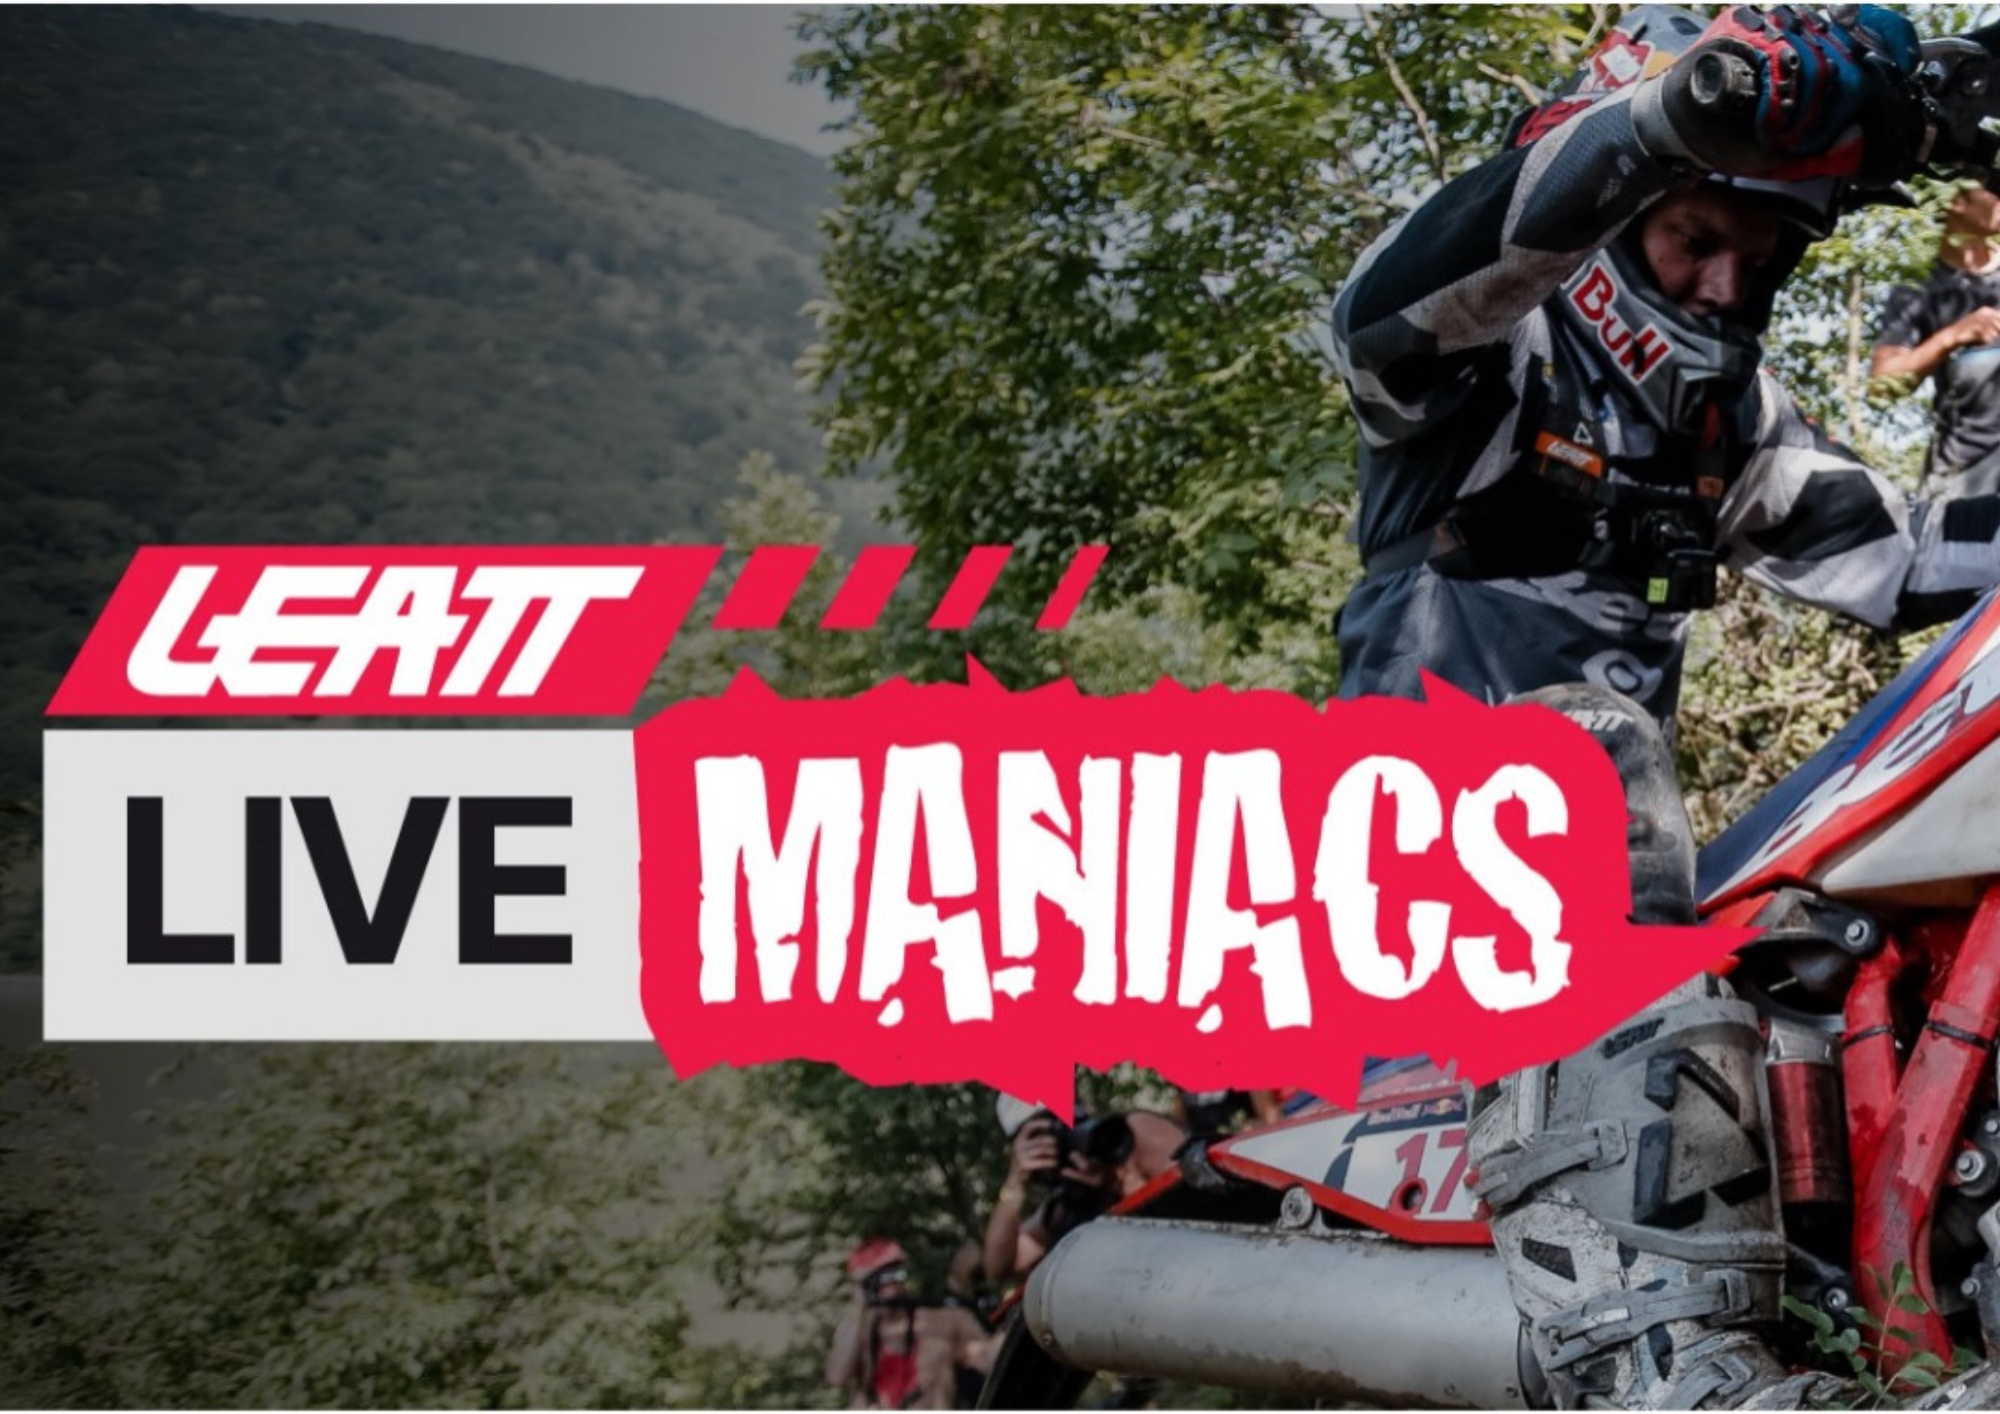 Leatt transforms Red Bull Romaniacs live broadcast into Leatt LIVEmaniacs